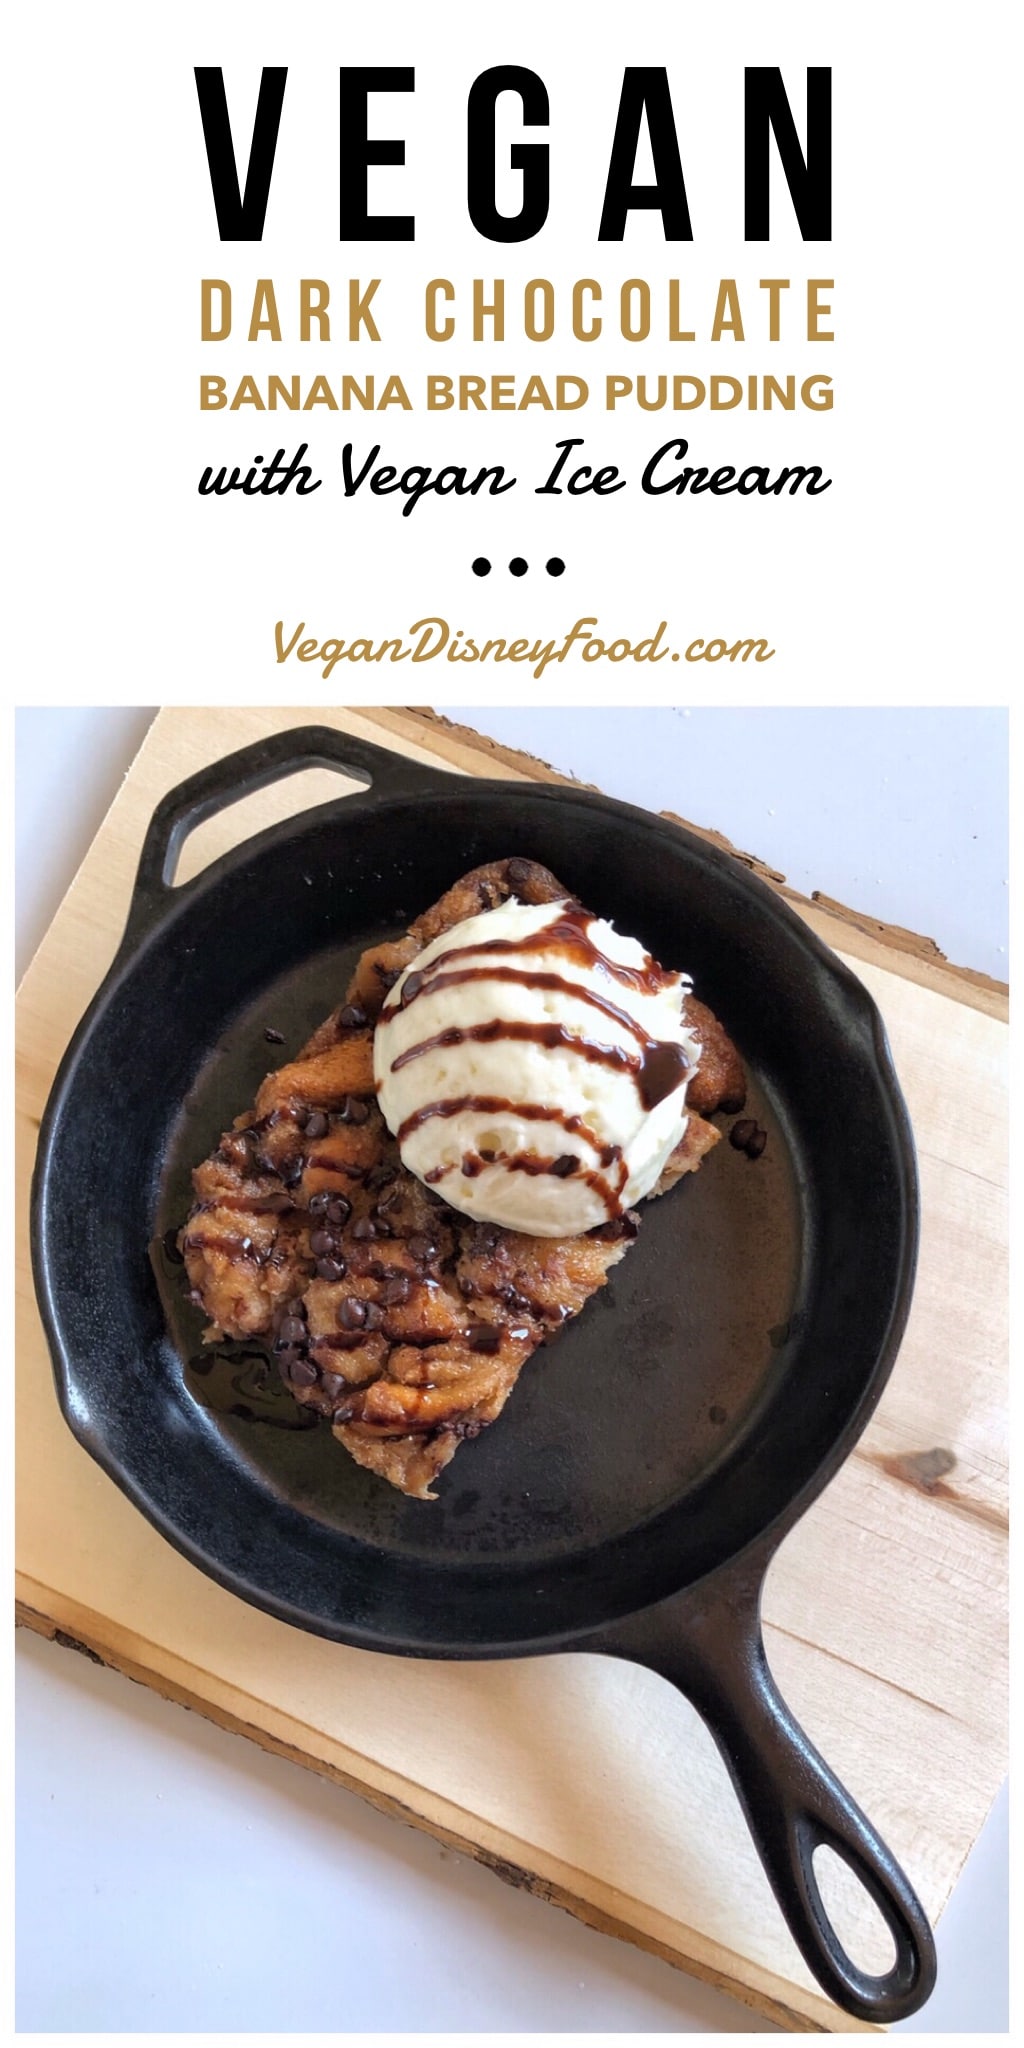 Vegan Dark Chocolate Banana Bread Pudding at The Plaza Restaurant in Magic Kingdom at Walt Disney World